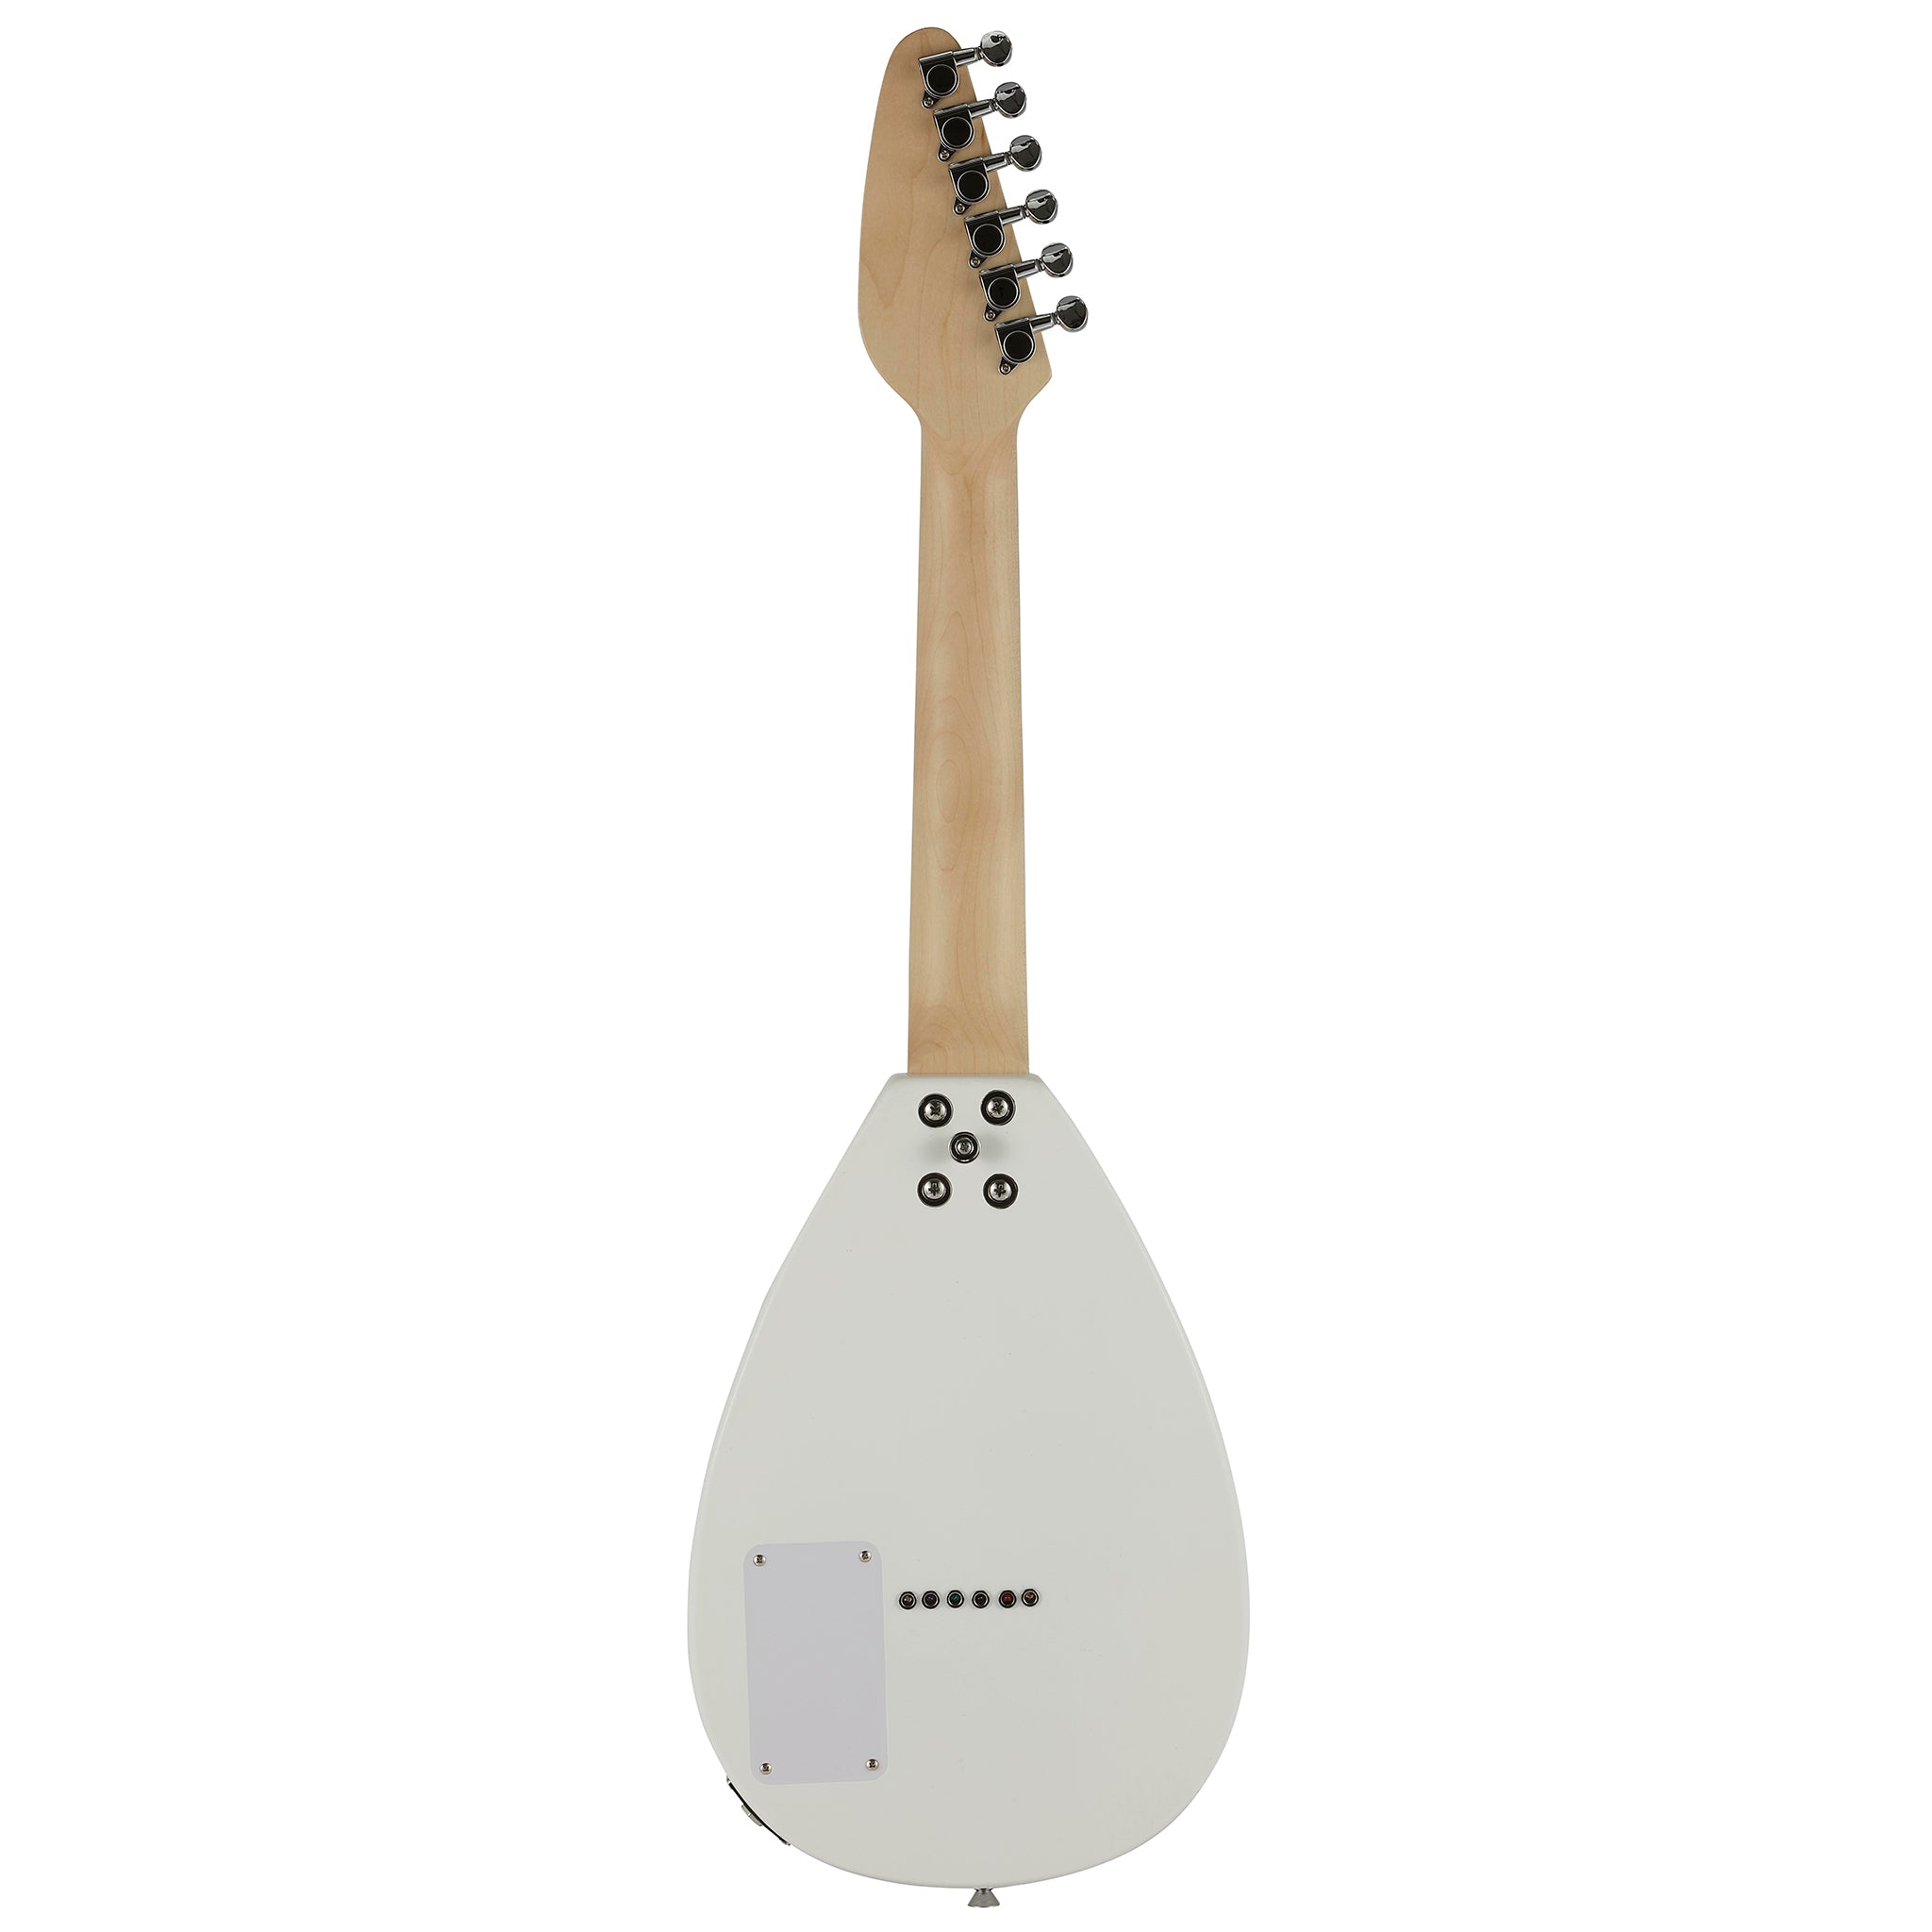 Vox Mark III Mini Electric Guitar 7